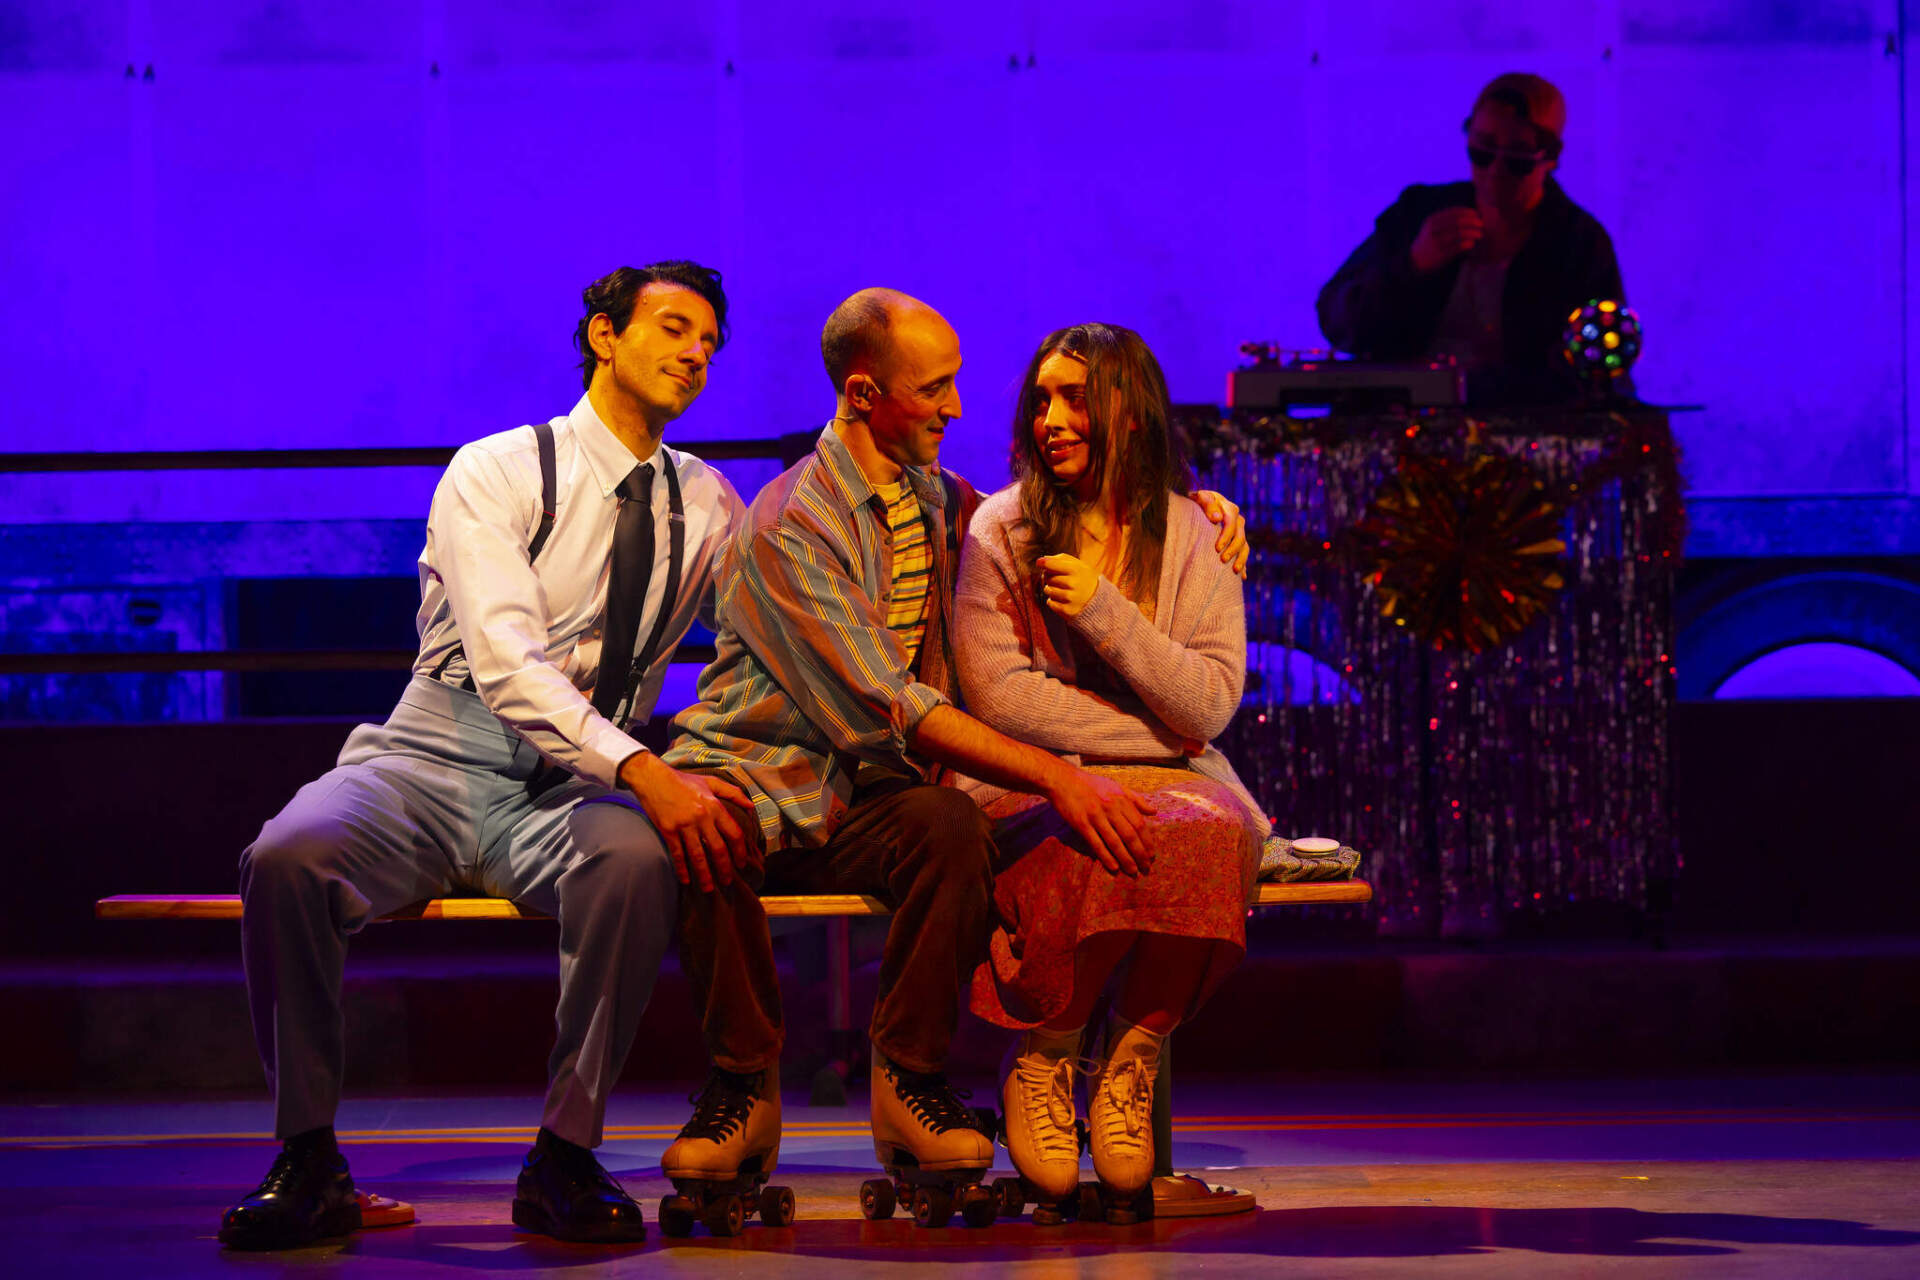 Kareem Elsamadicy, Jesse Garlick and Josephine Moshiri Elwood in "The Band's Visit" at the Huntington mainstage. (Courtesy T Charles Erickson)